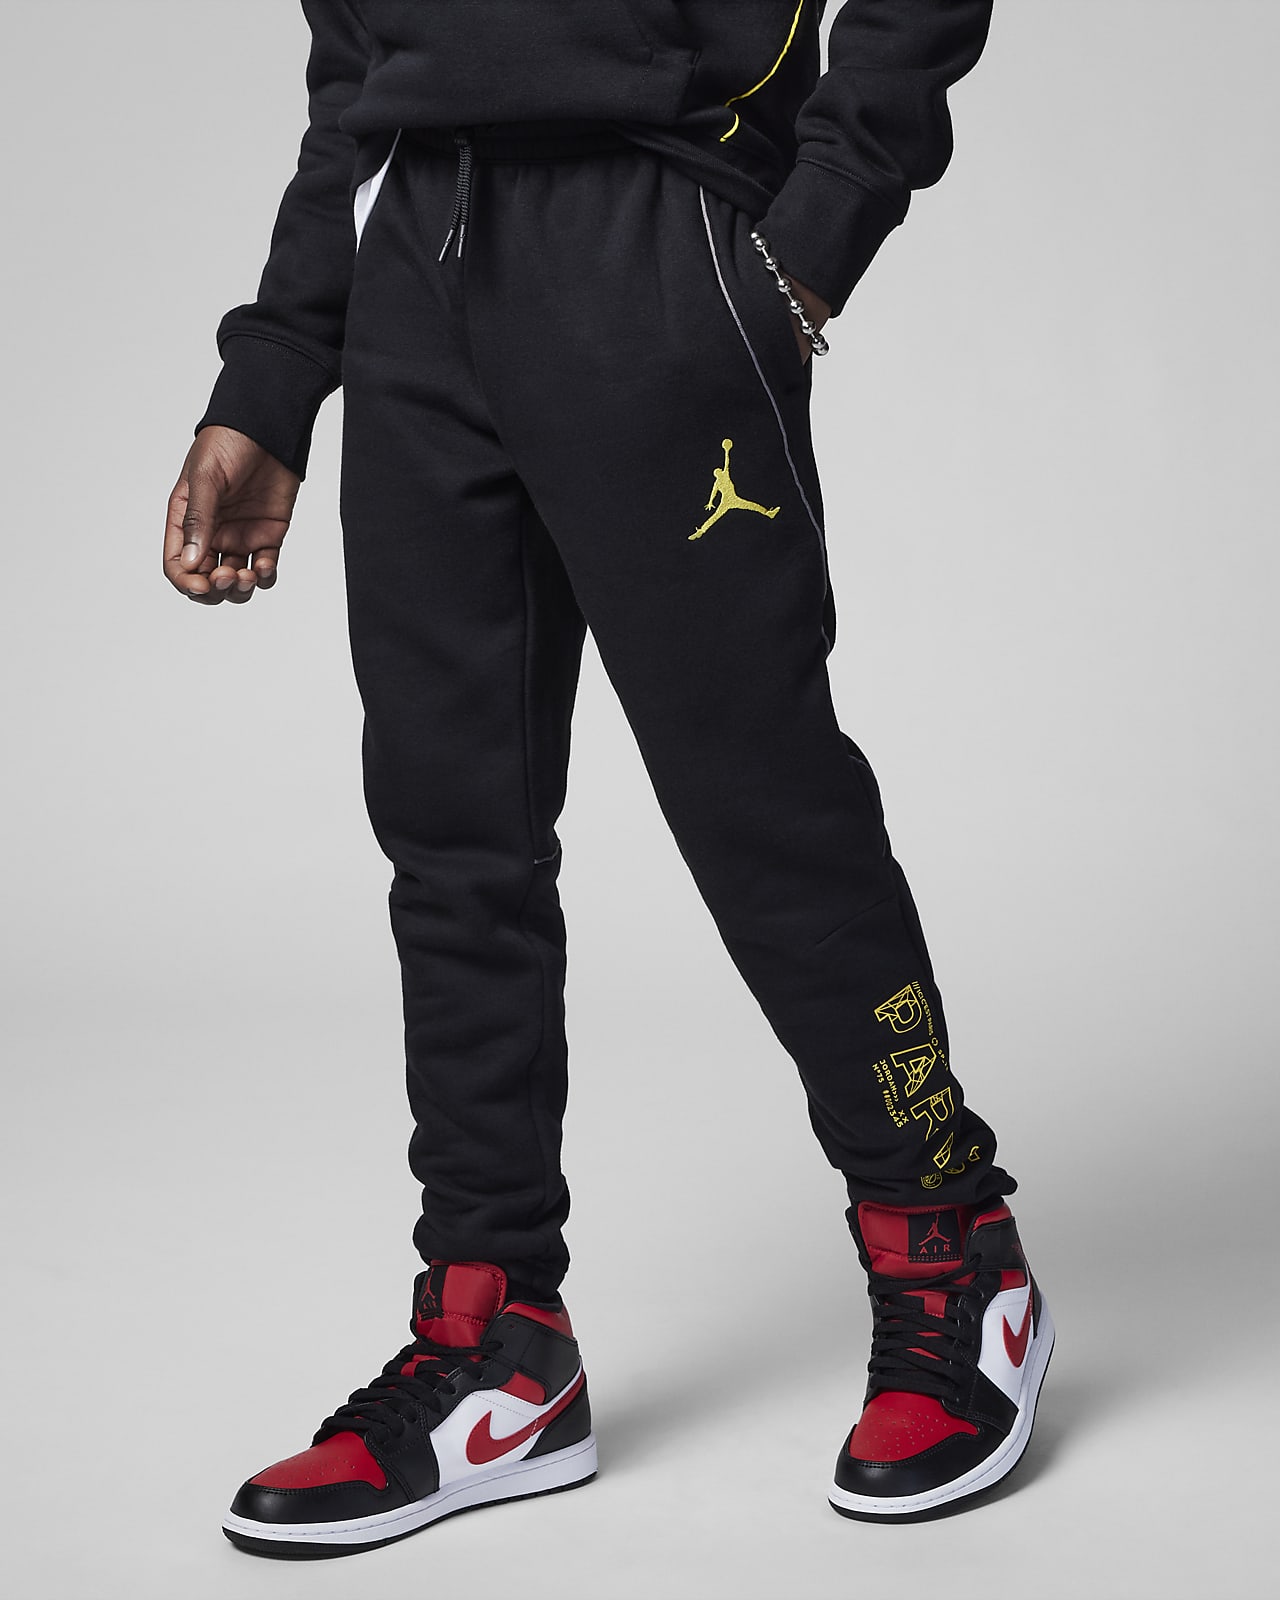 sequía caliente arena Jordan Paris Saint-Germain Fleece Trousers Older Kids' Trousers. Nike LU